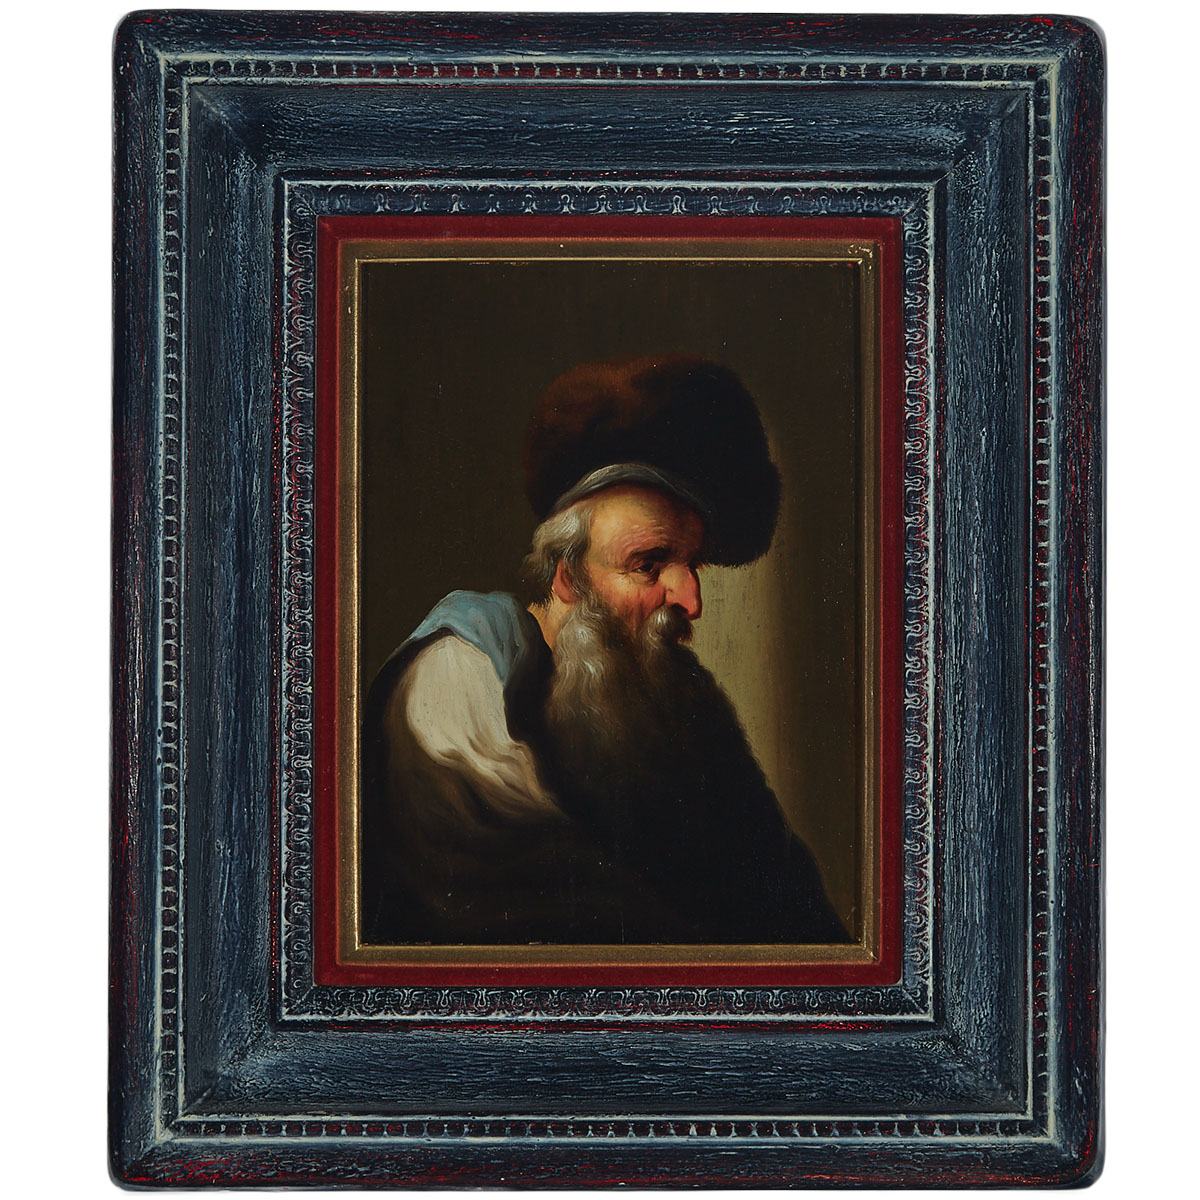 Follower of Rembrandt van Rijn (1606-1669)